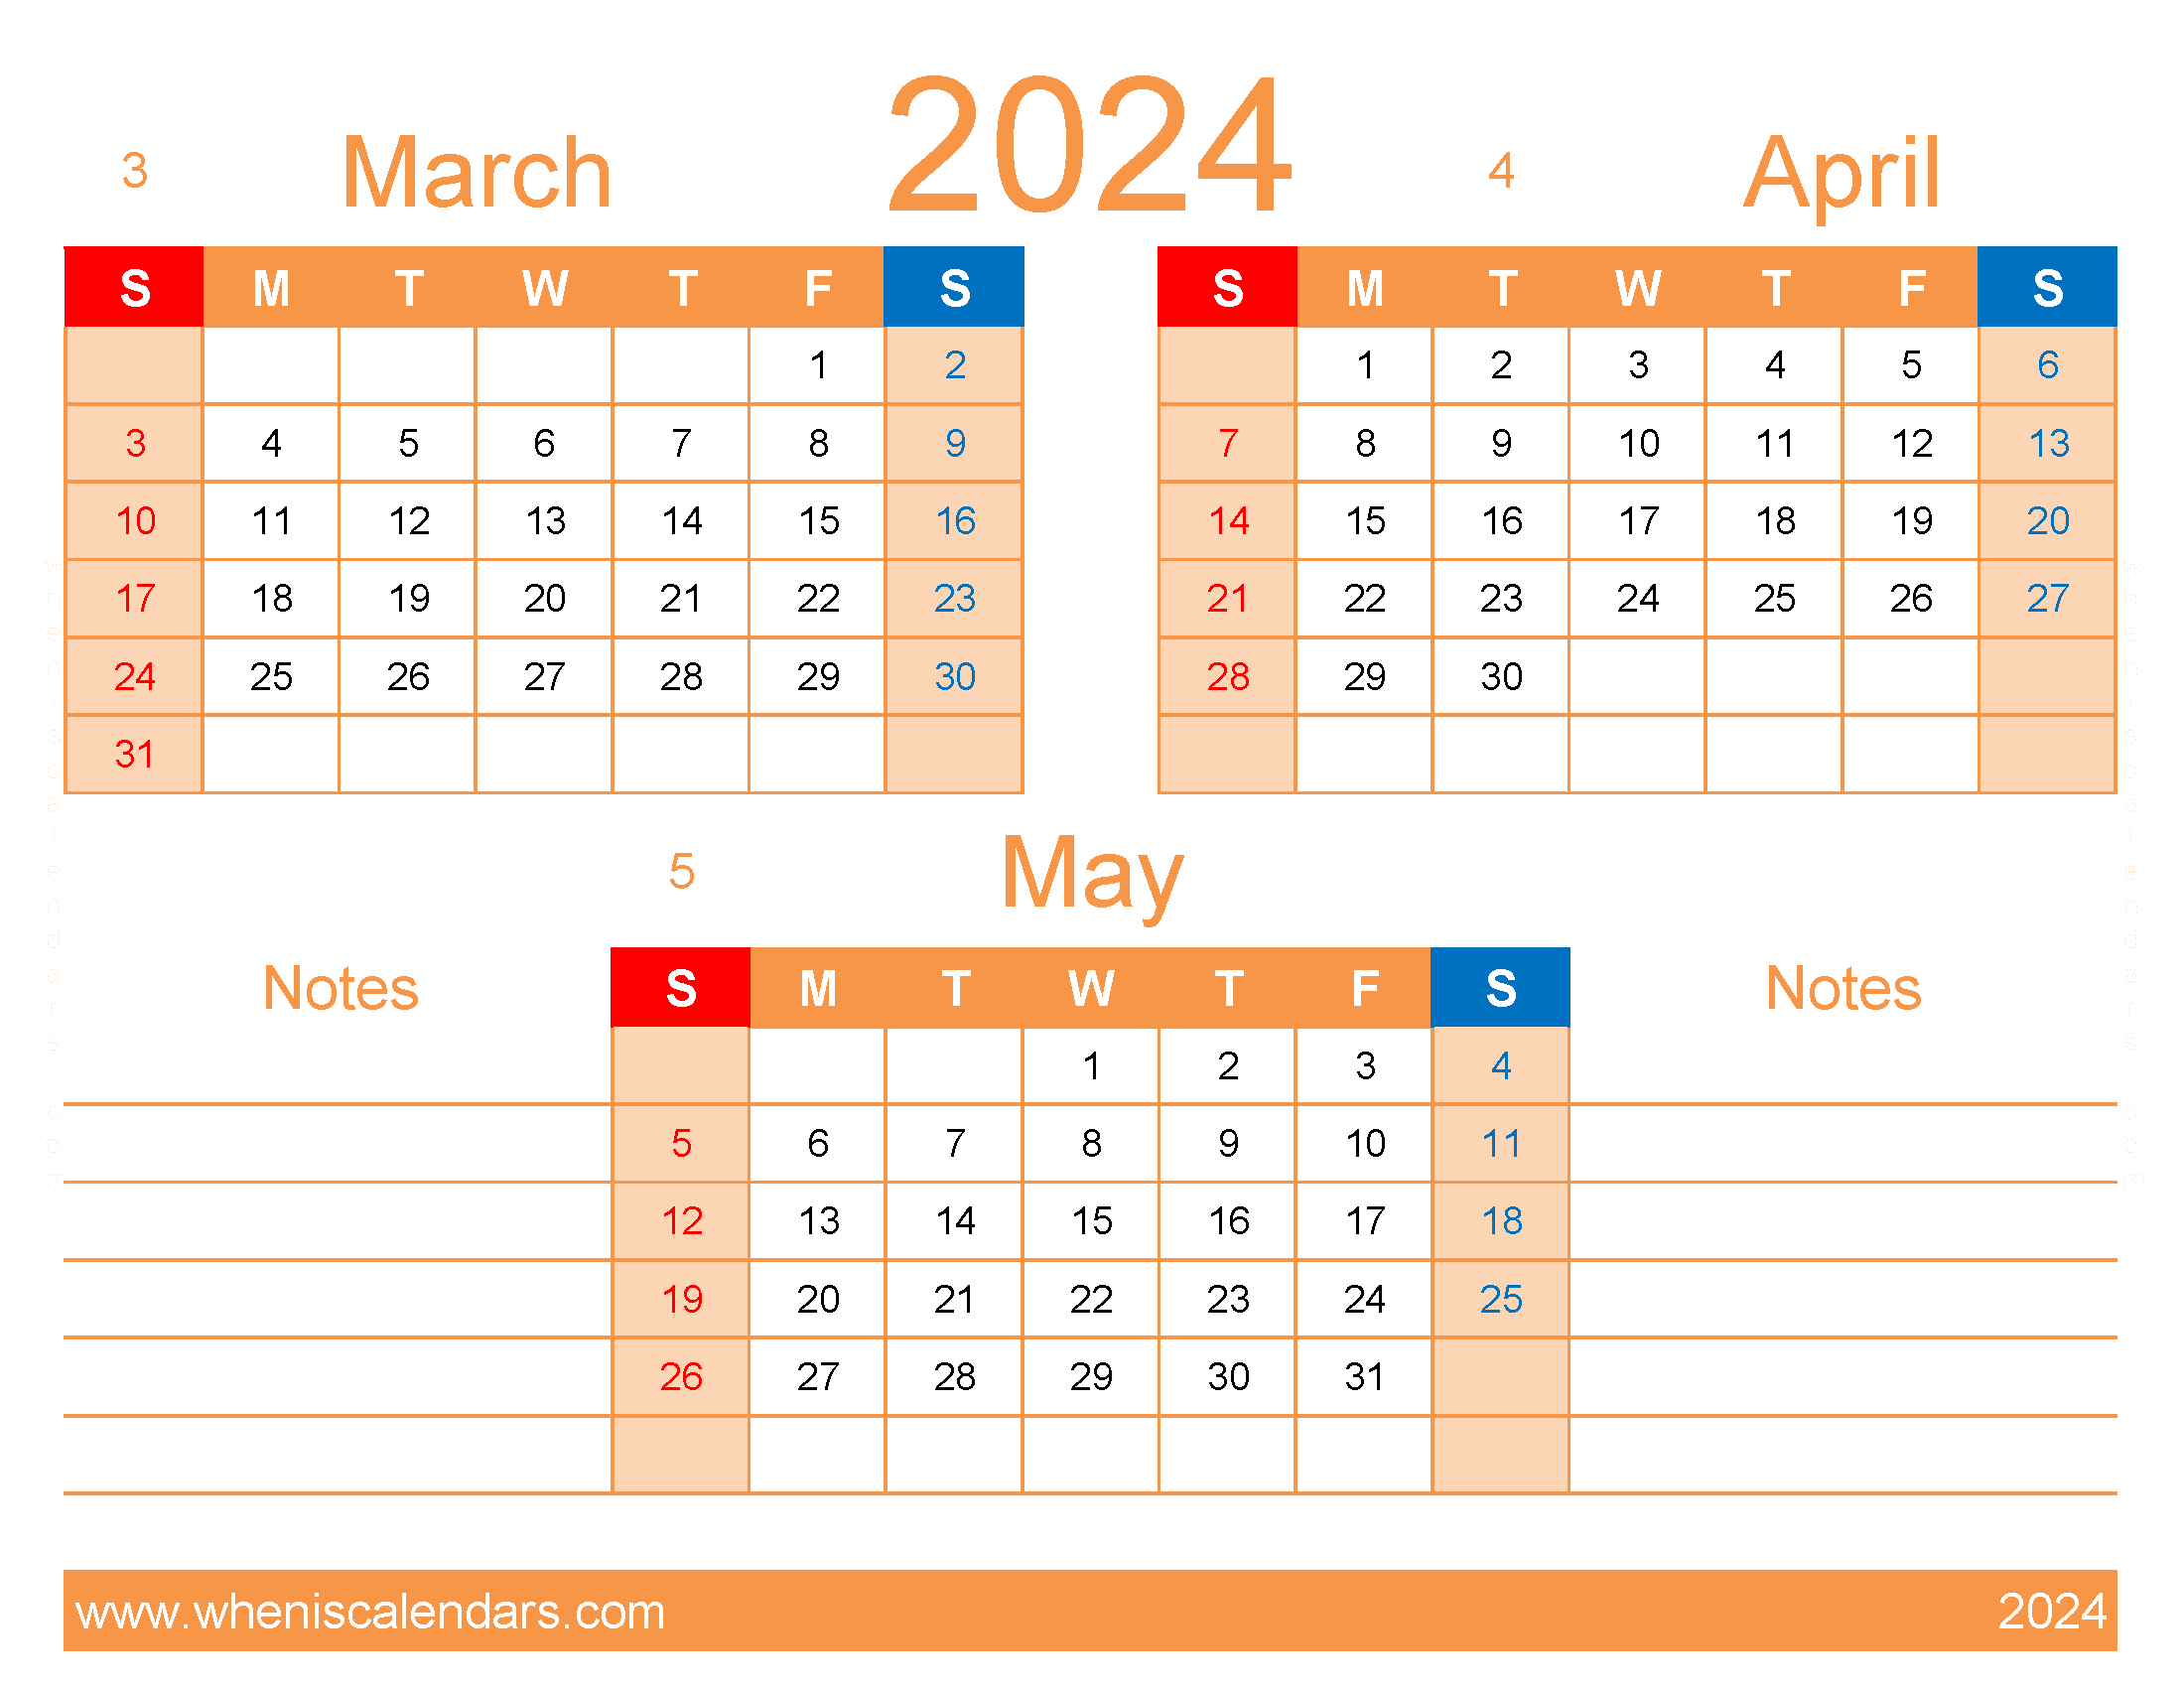 Download calendar Mar Apr May 2024 MAM426